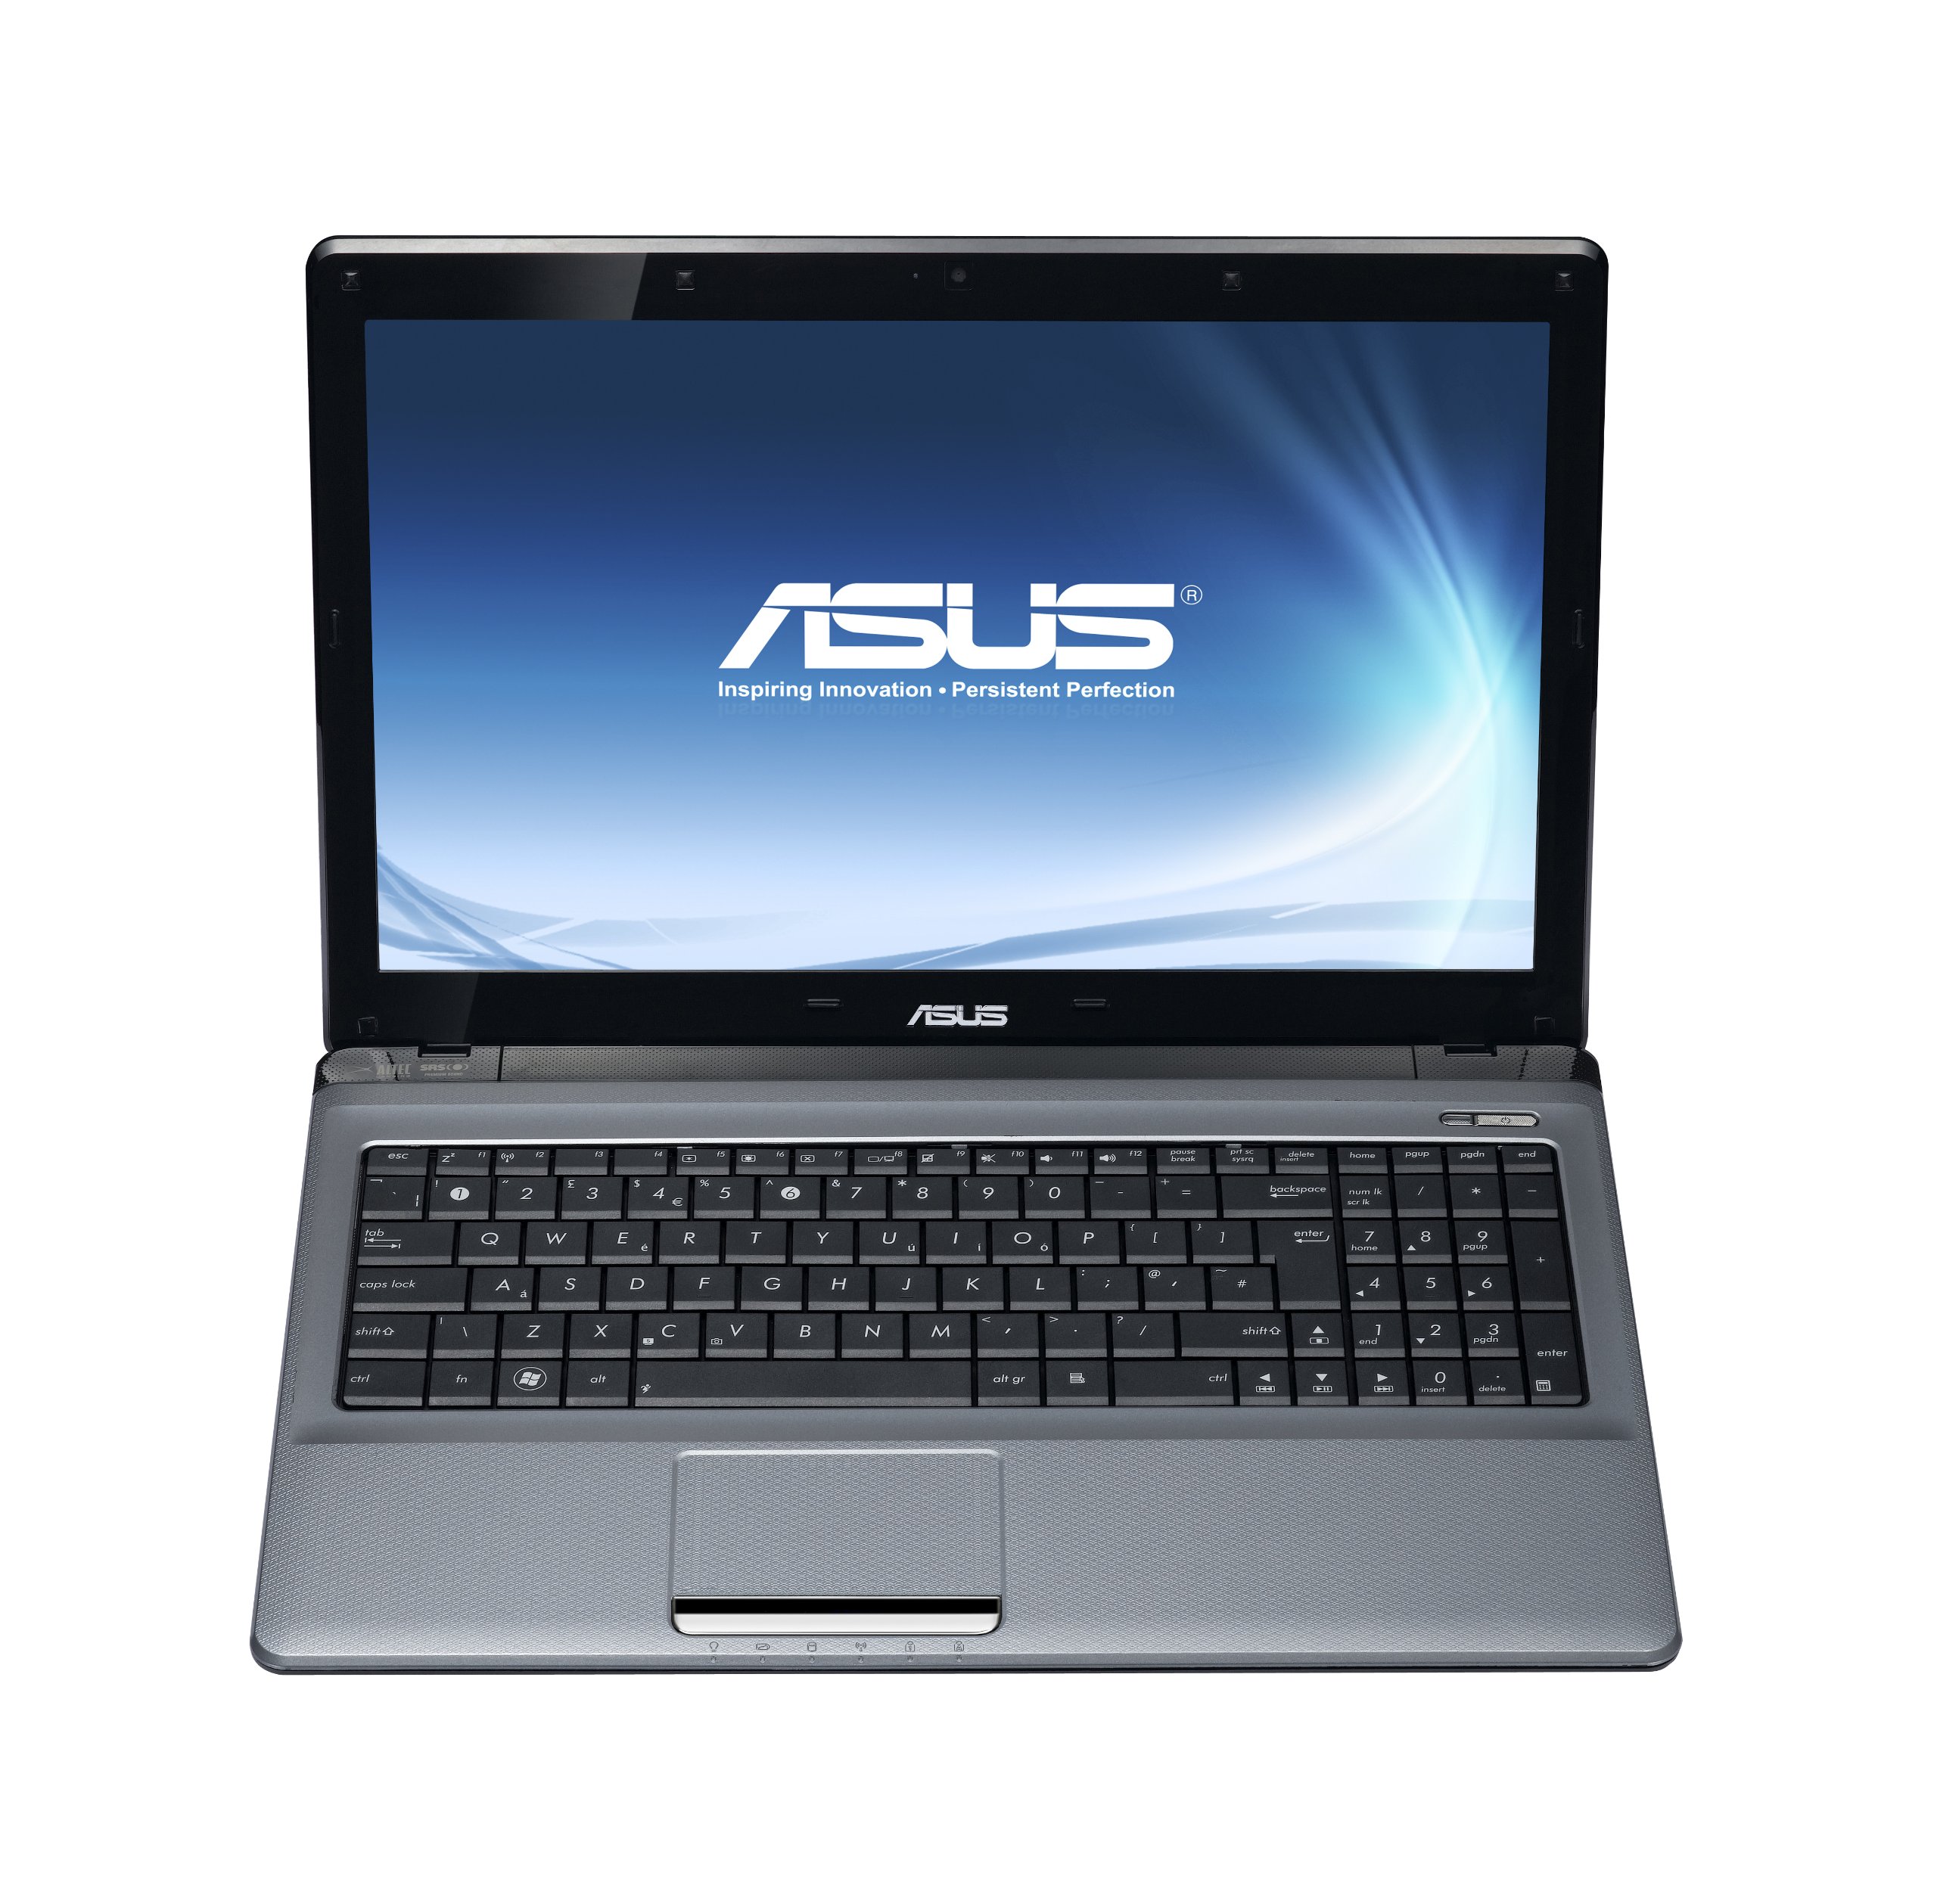 Asus A53E Notebook